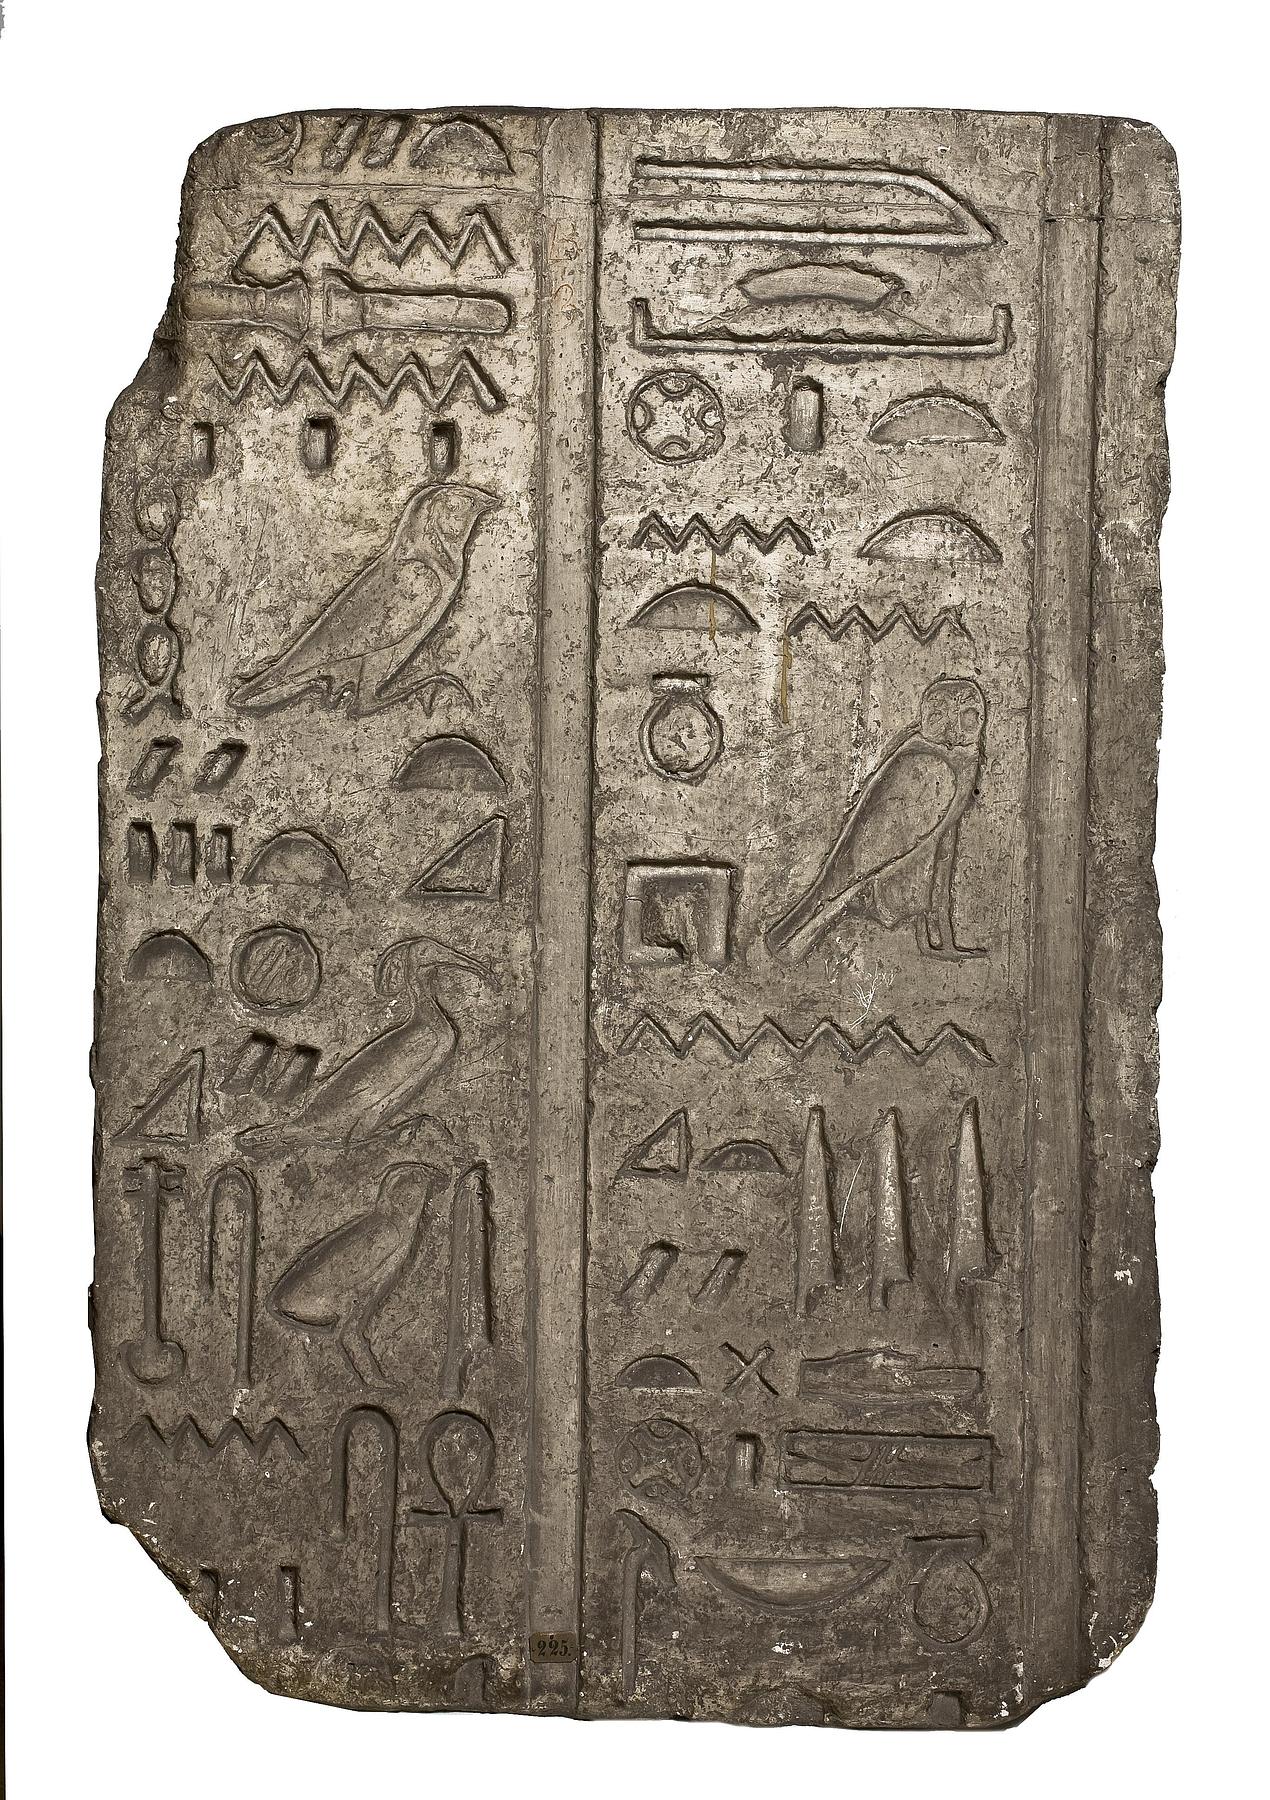 Hieroglyphic inscription, L225